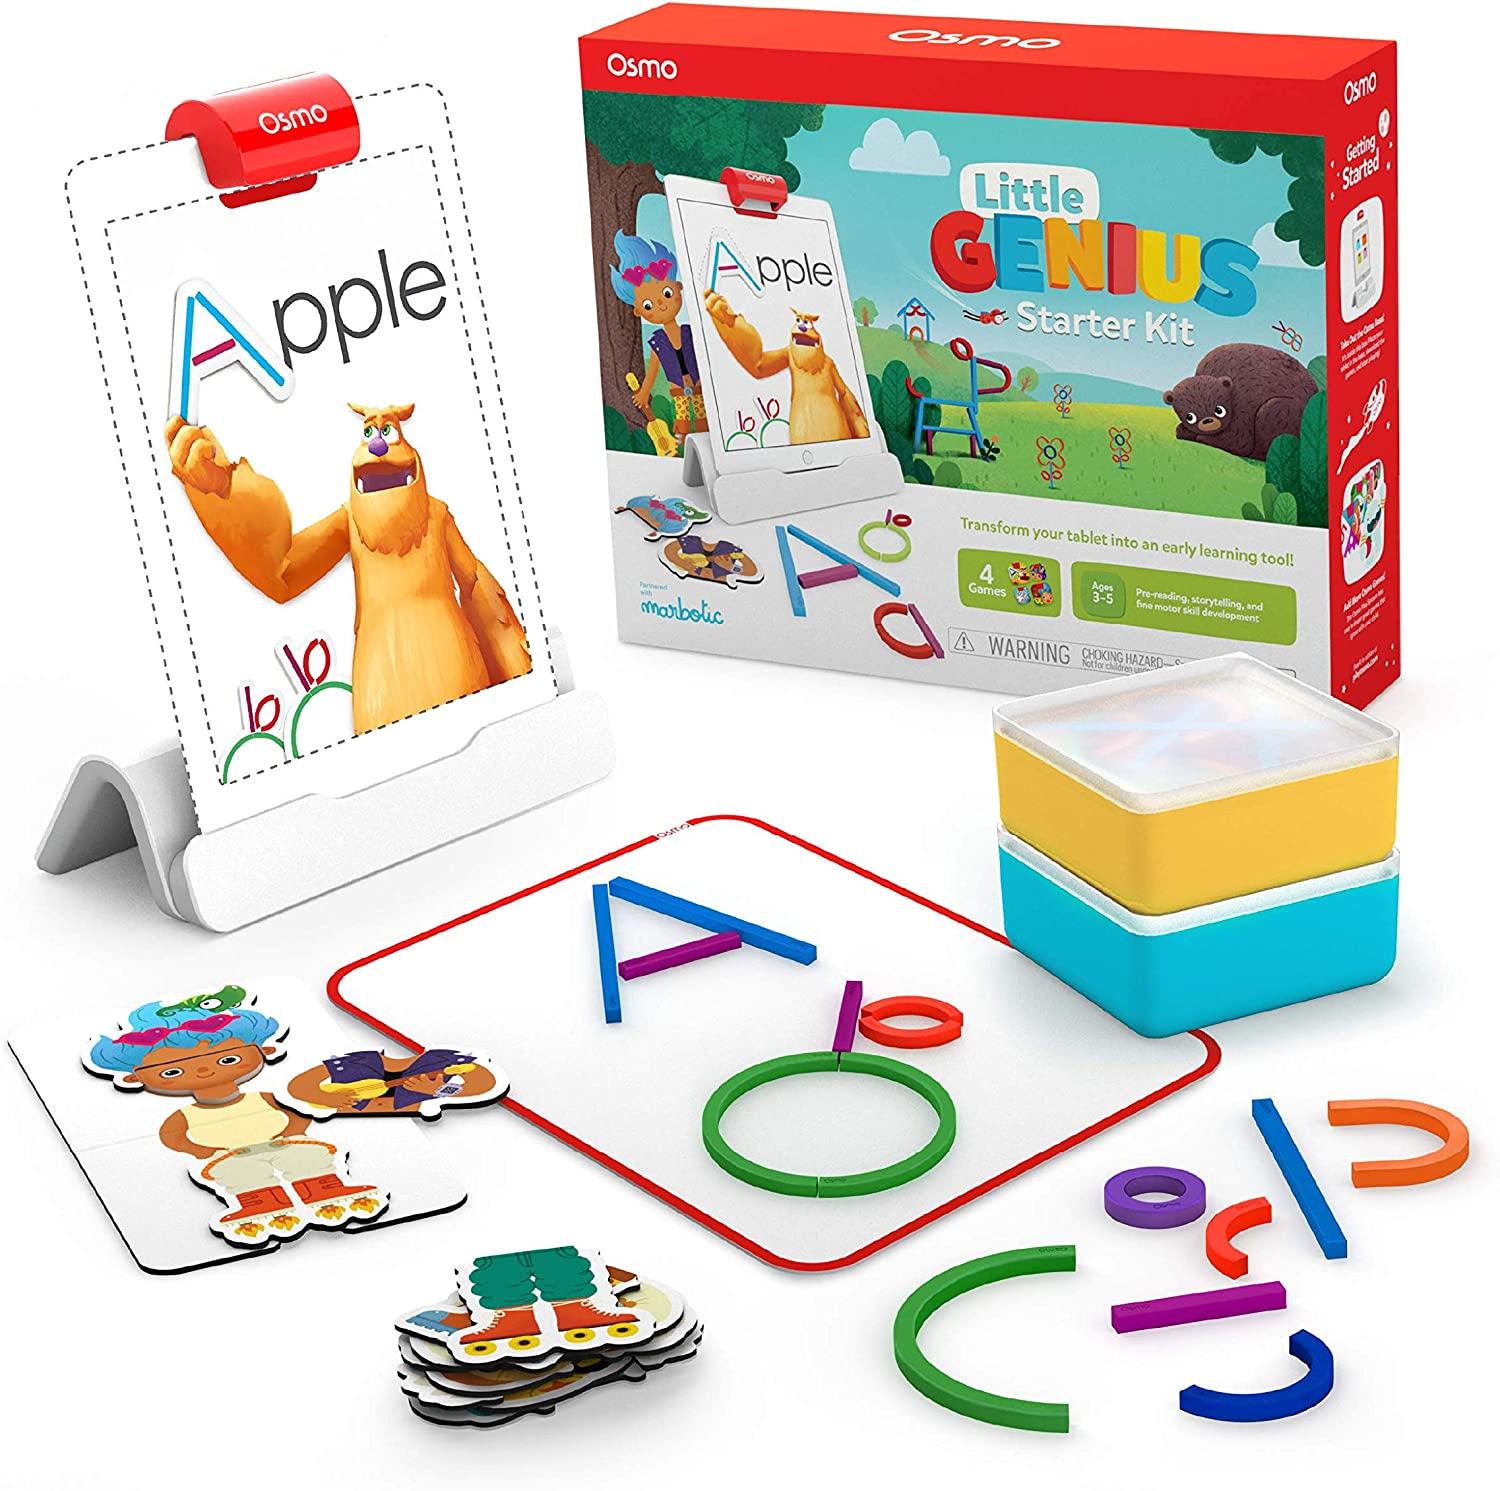 Osmo Little Genius Starter Kit for iPad for $55.99 Shipped